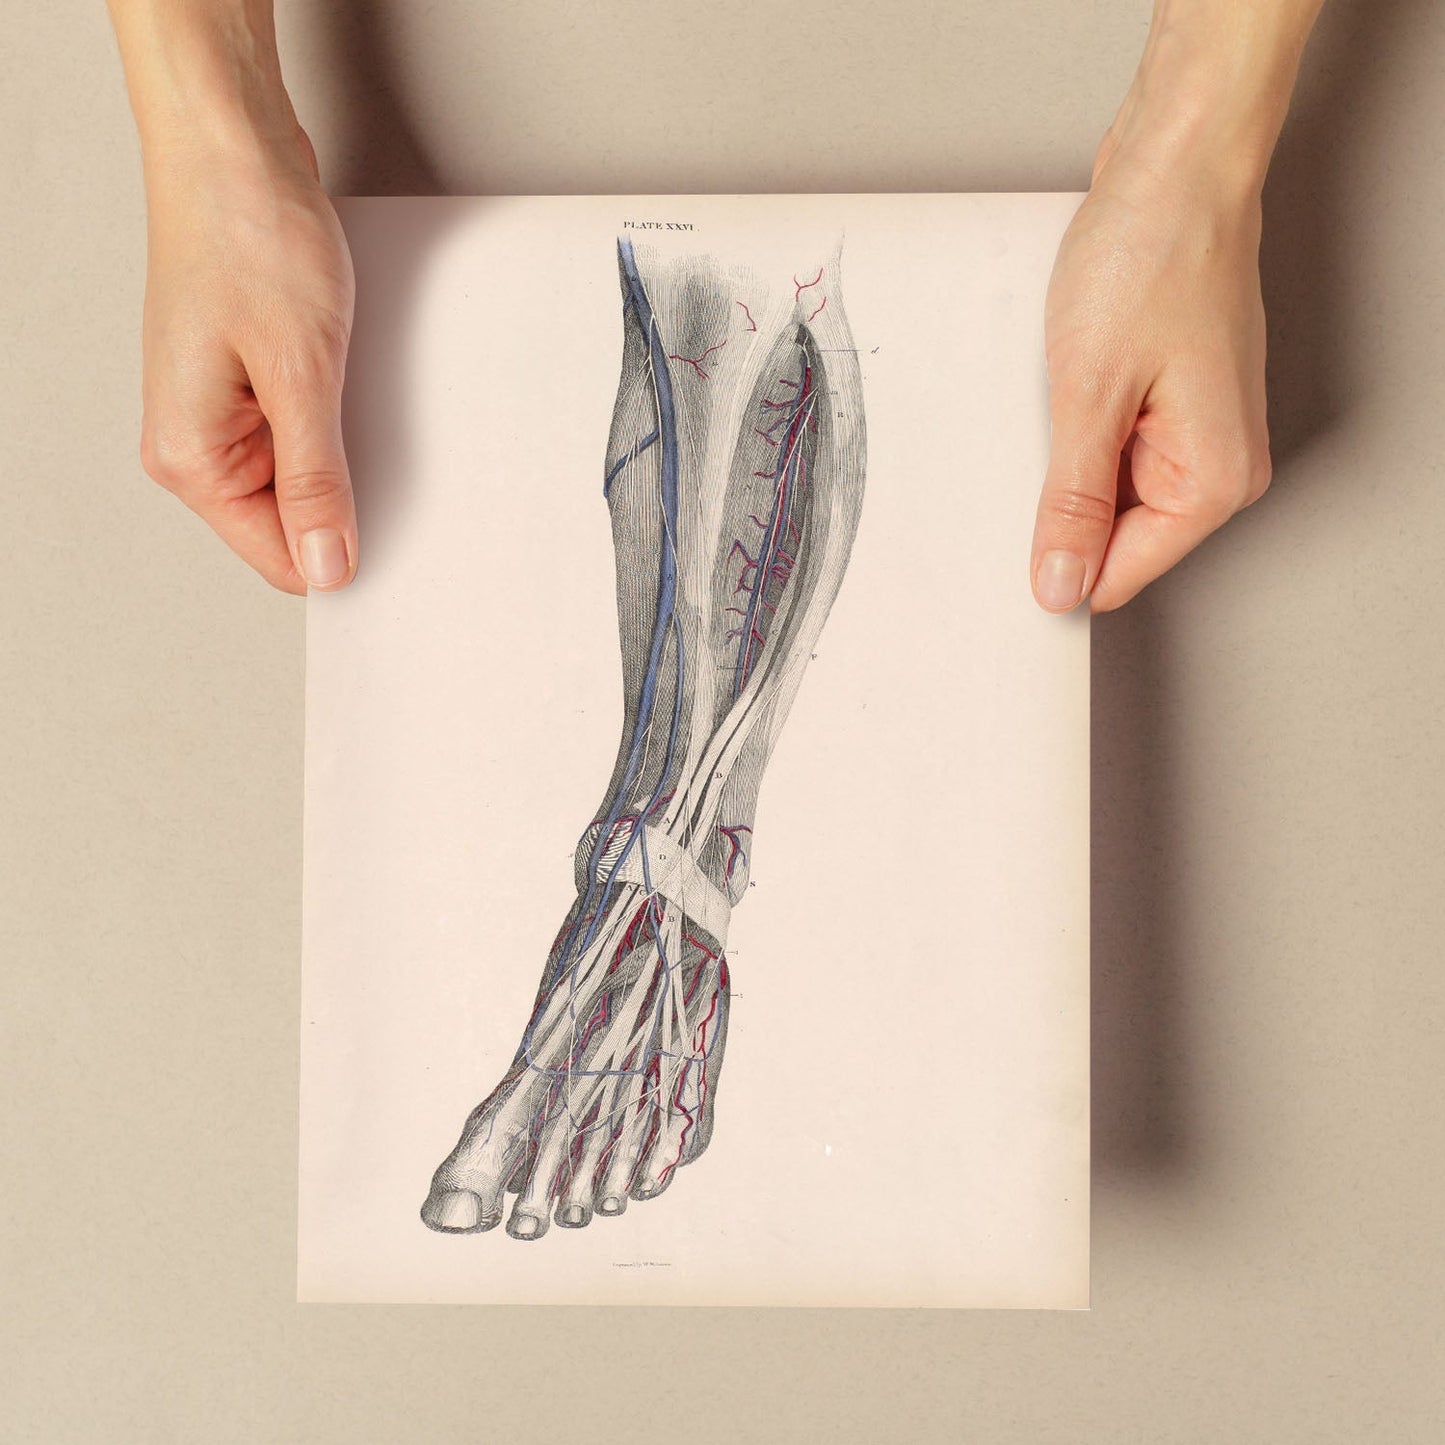 Dissection of the lower leg-Artwork-Nacnic-Nacnic Estudio SL